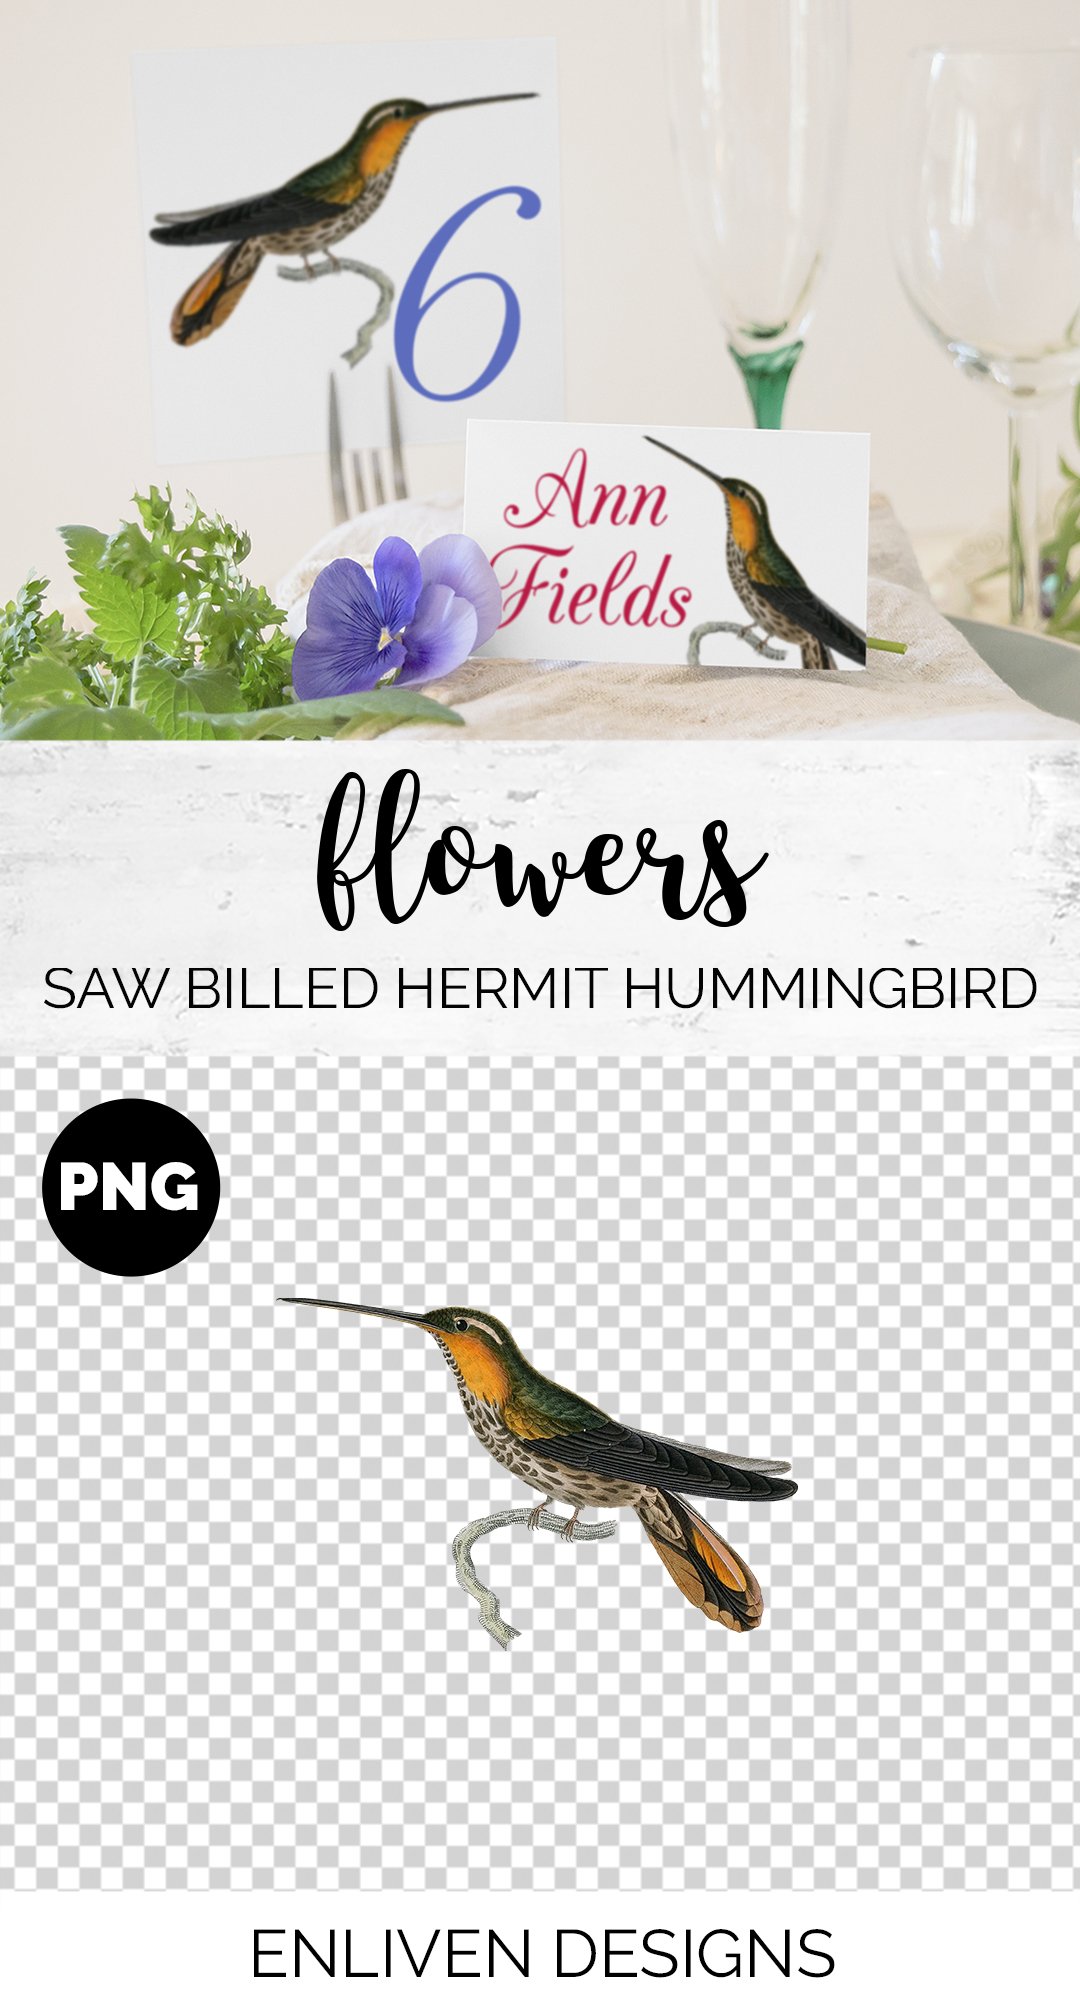 e01v01r 84561 saw billed hermit hummingbird b 802